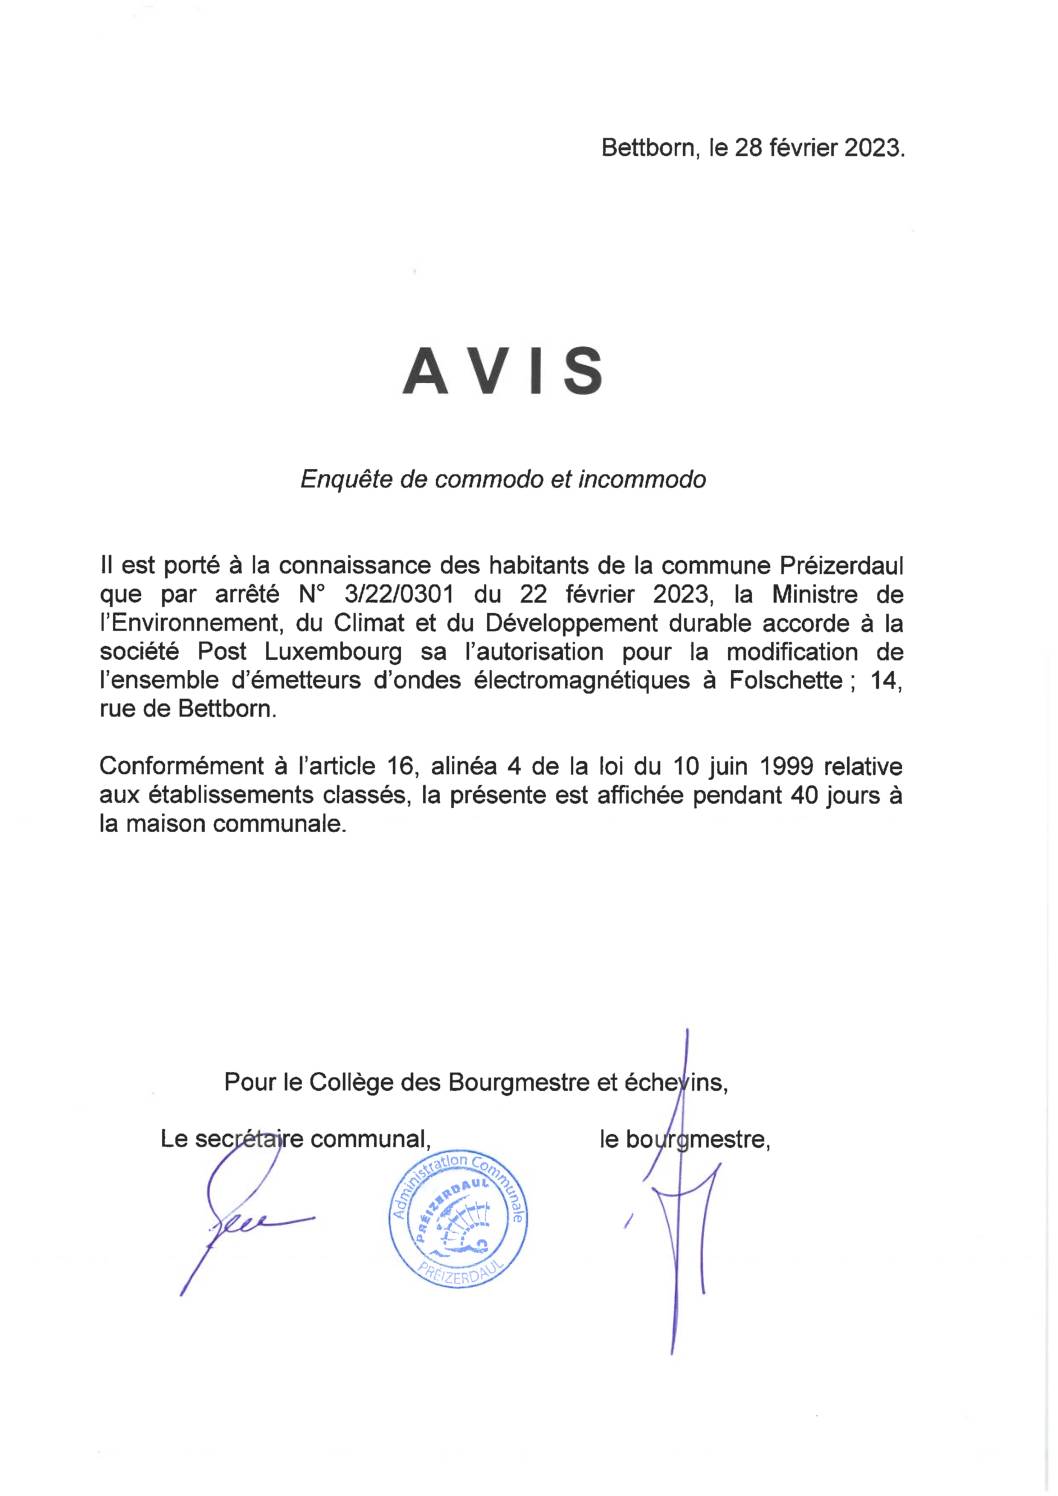 AVIS POST Luxembourg (28.02.2023)